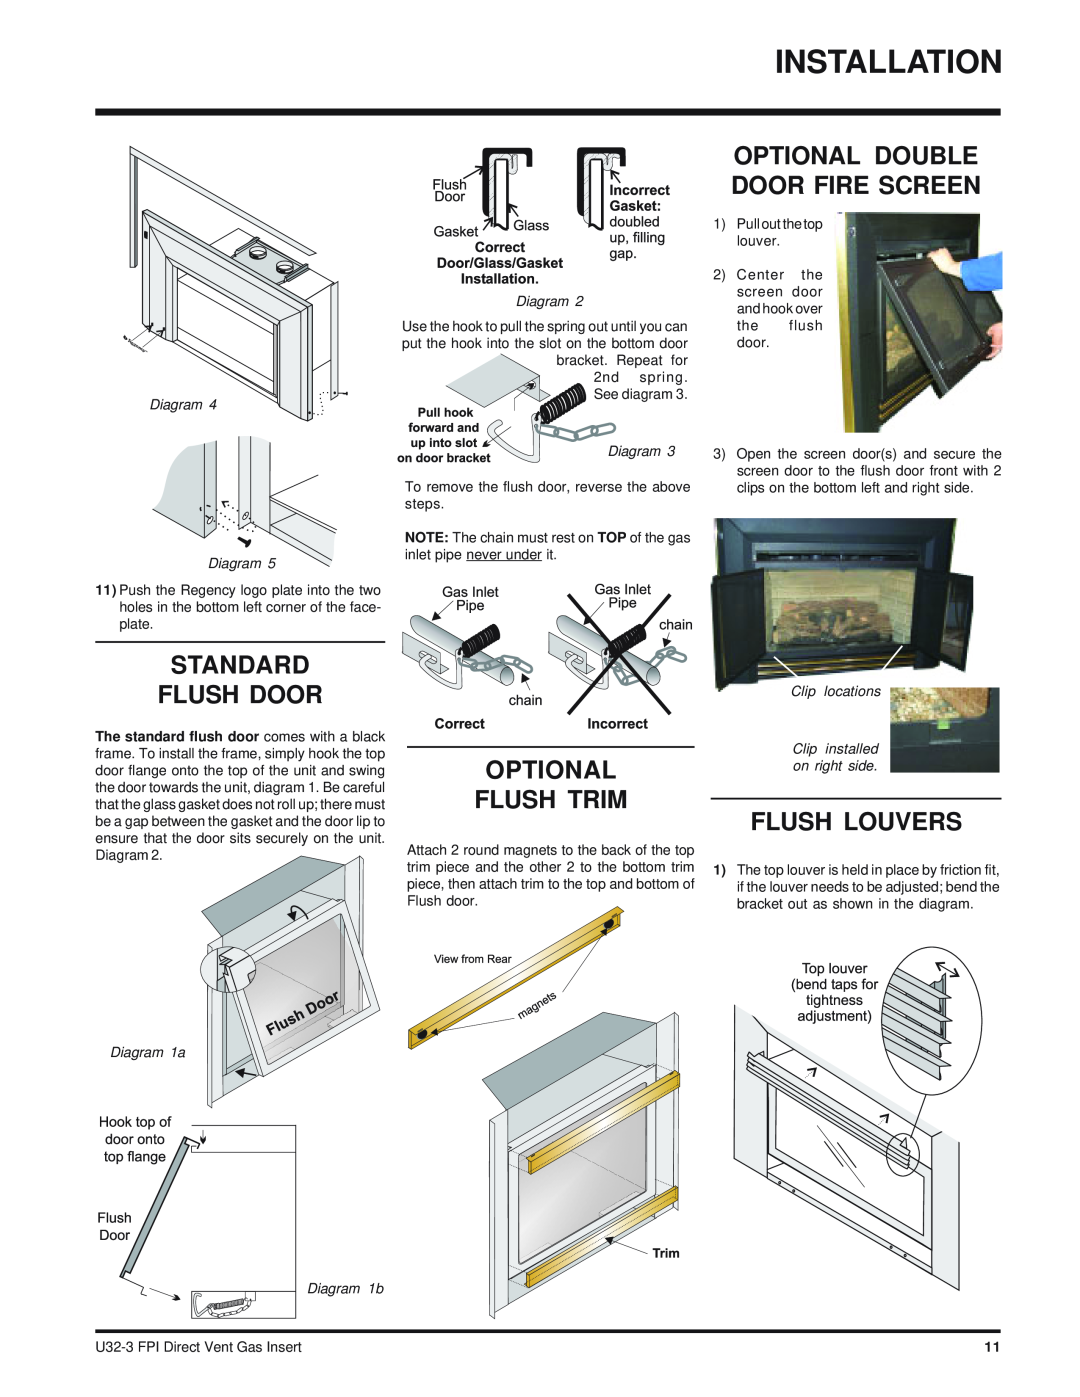 Regency U32-NG3 installation manual Optional Double Door Fire Screen, Standard Flush Door, Flush Trim, Flush Louvers 